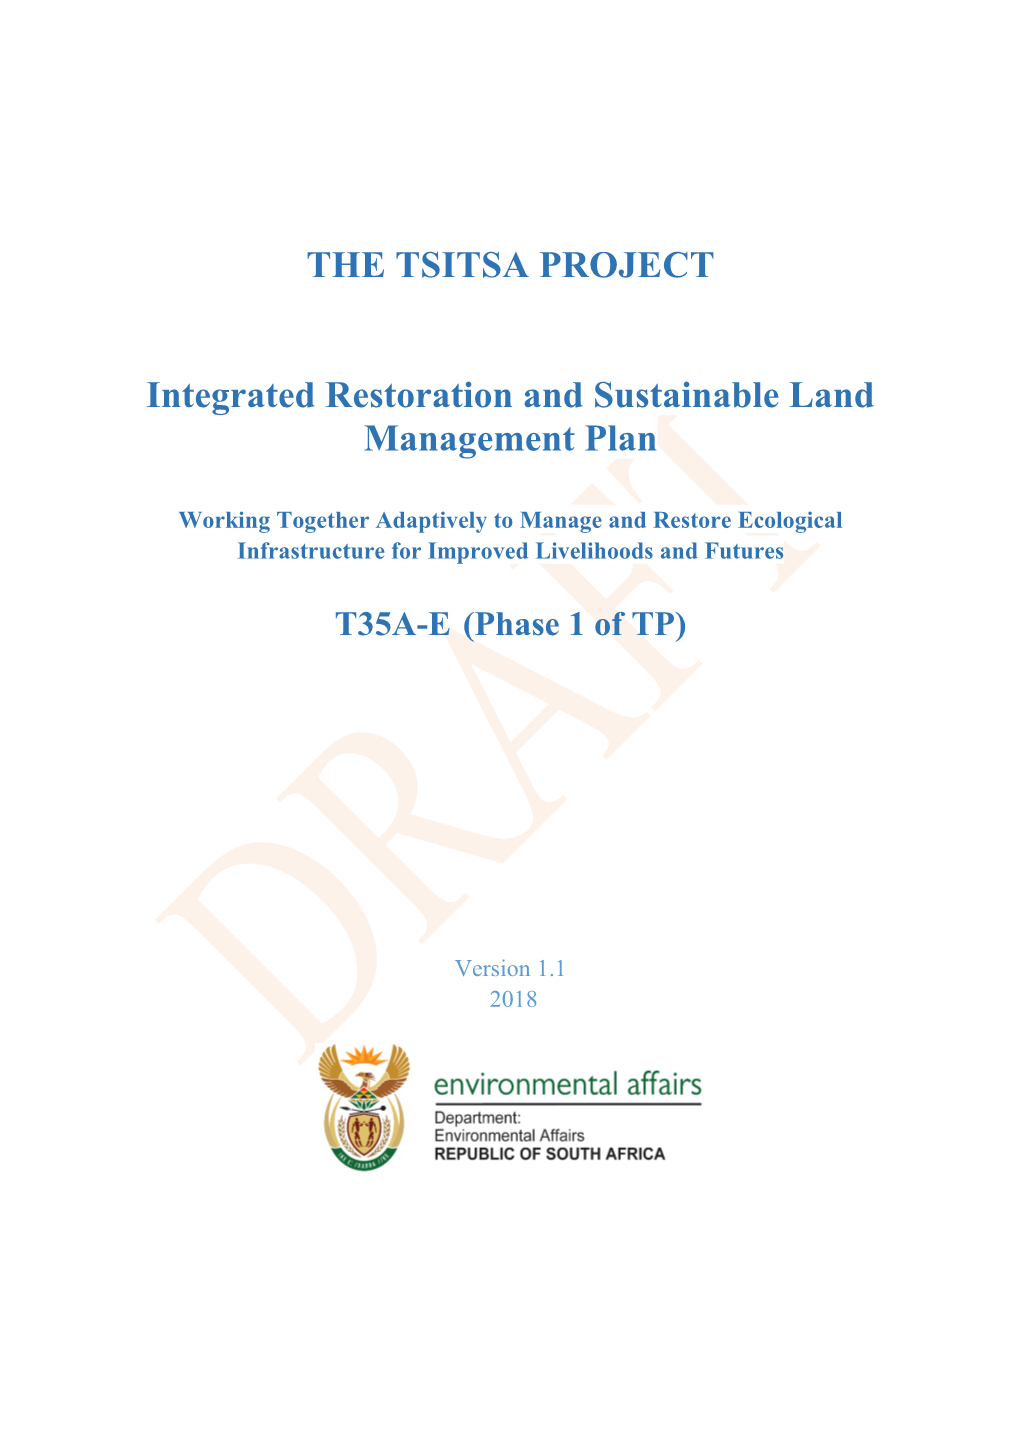 THE TSITSA PROJECT Integrated Restoration and Sustainable Land